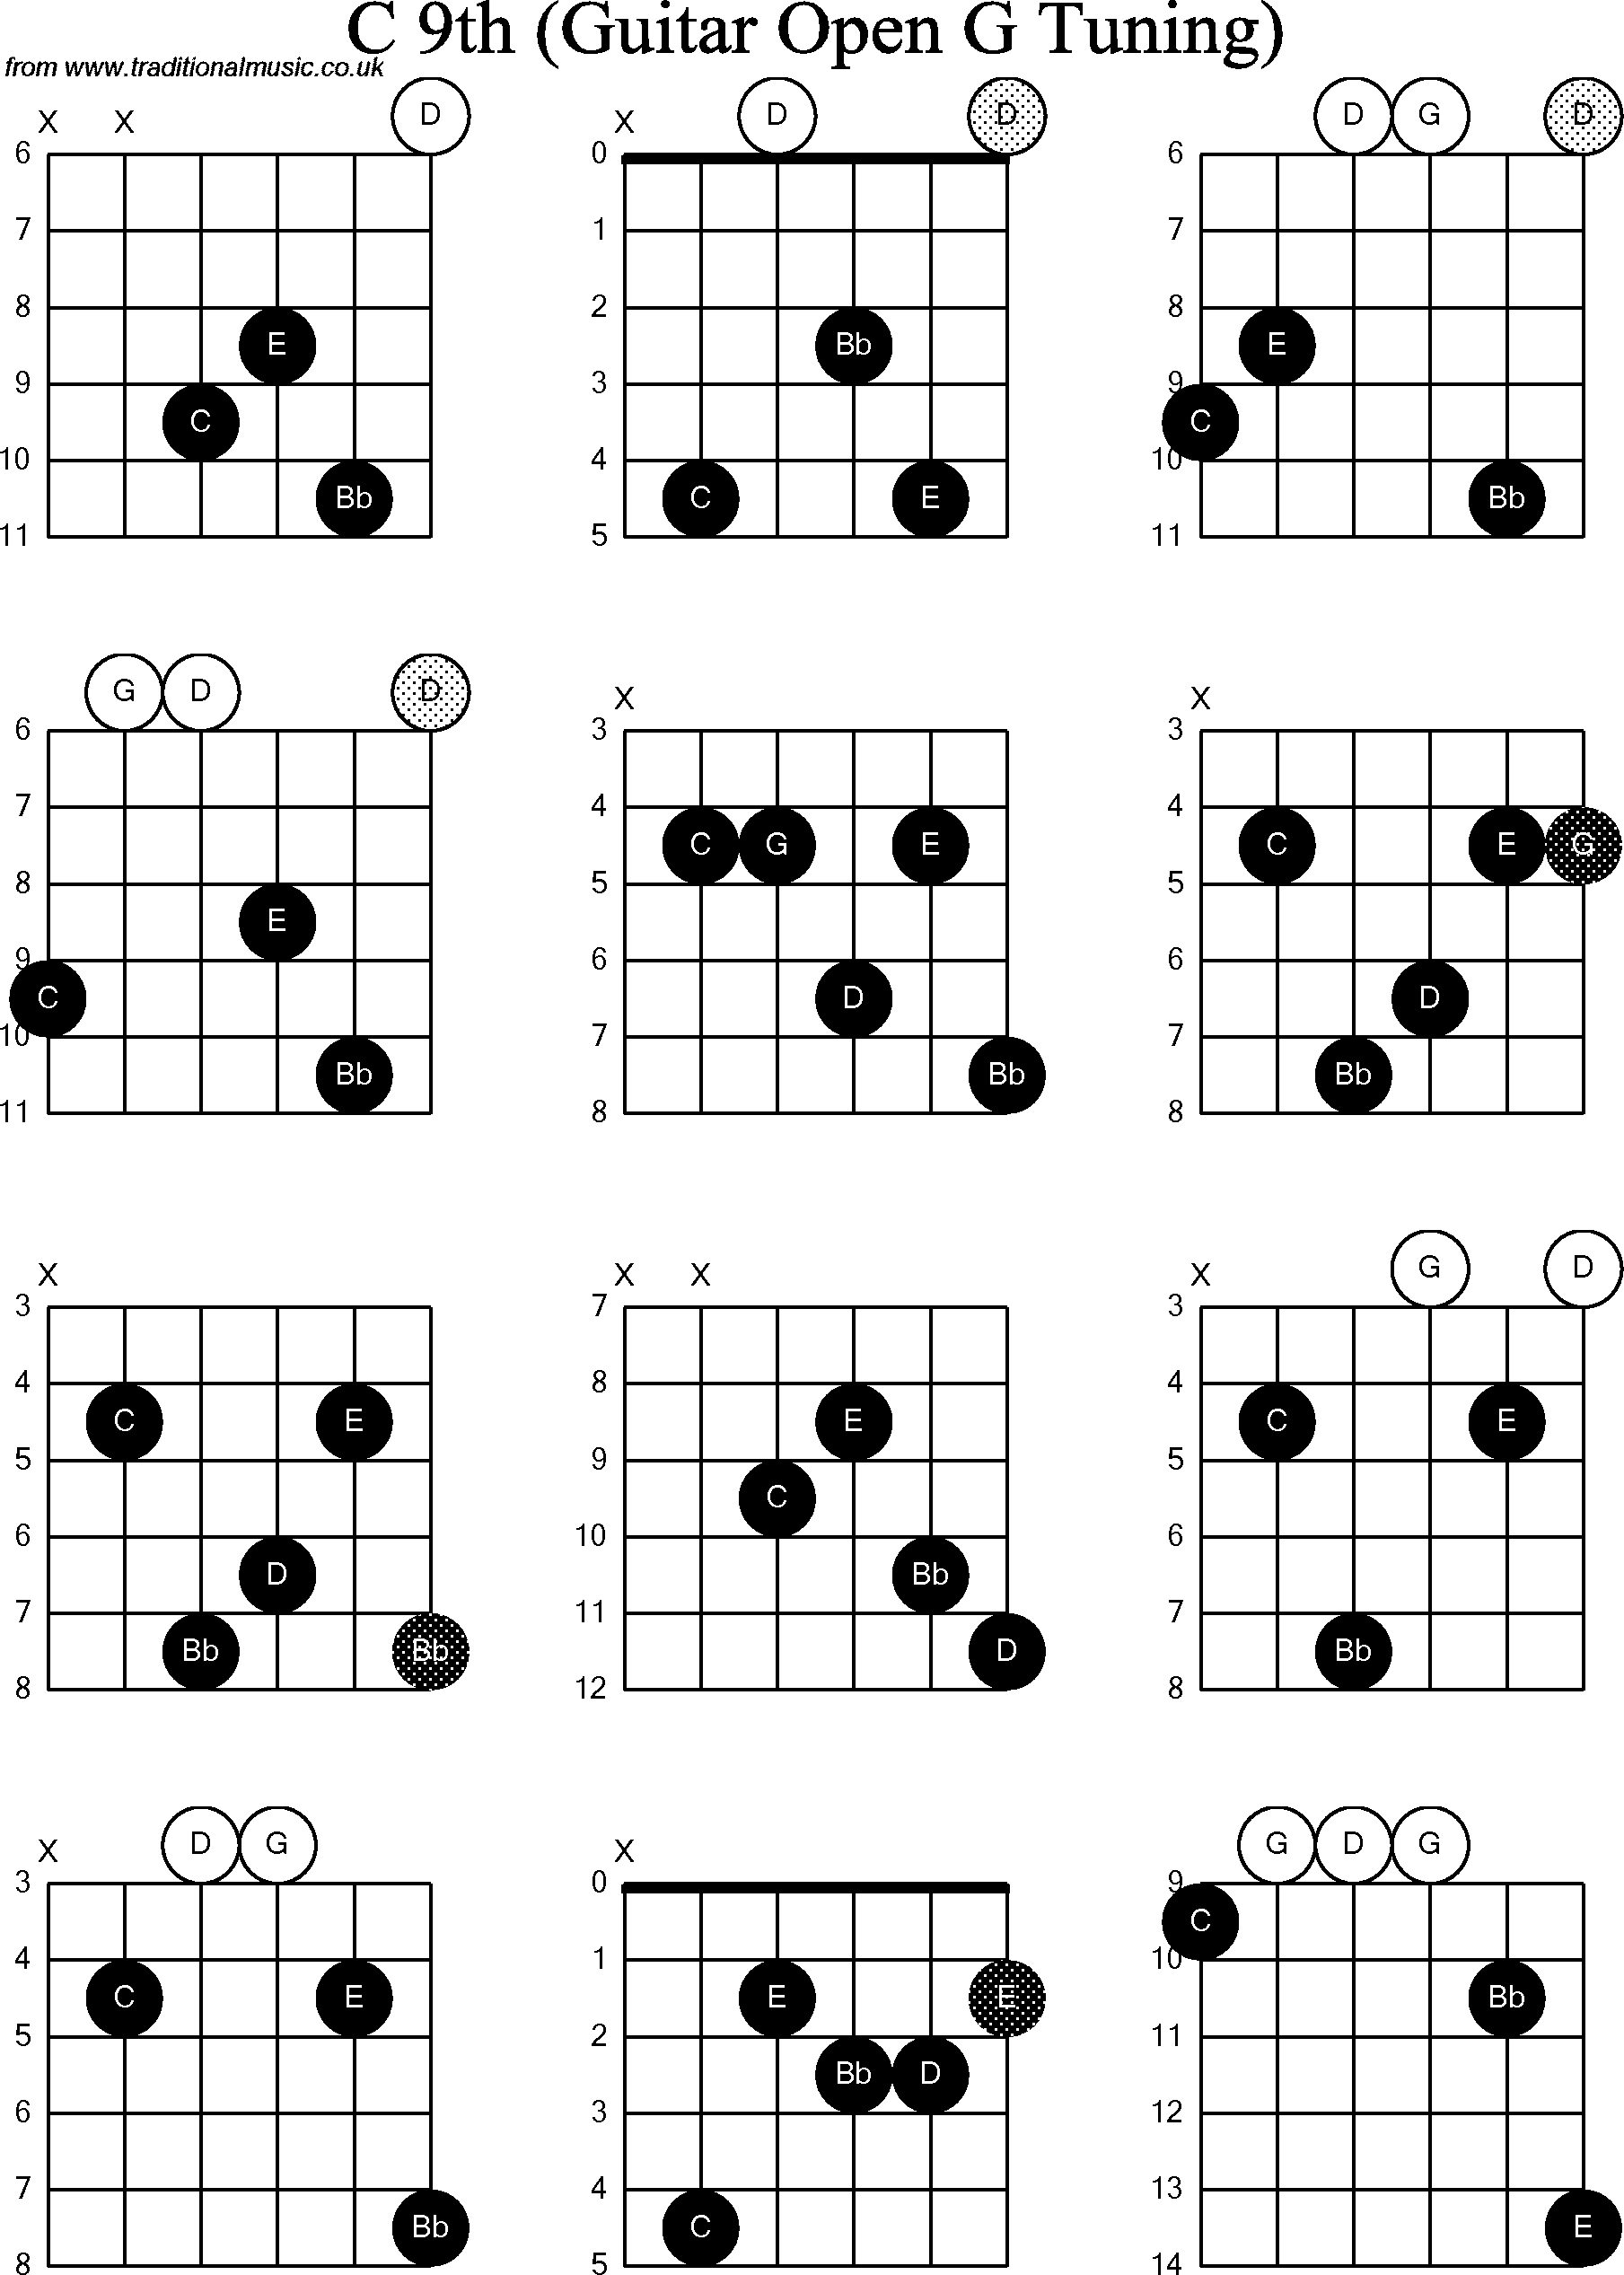 Chord diagrams for Dobro C9th